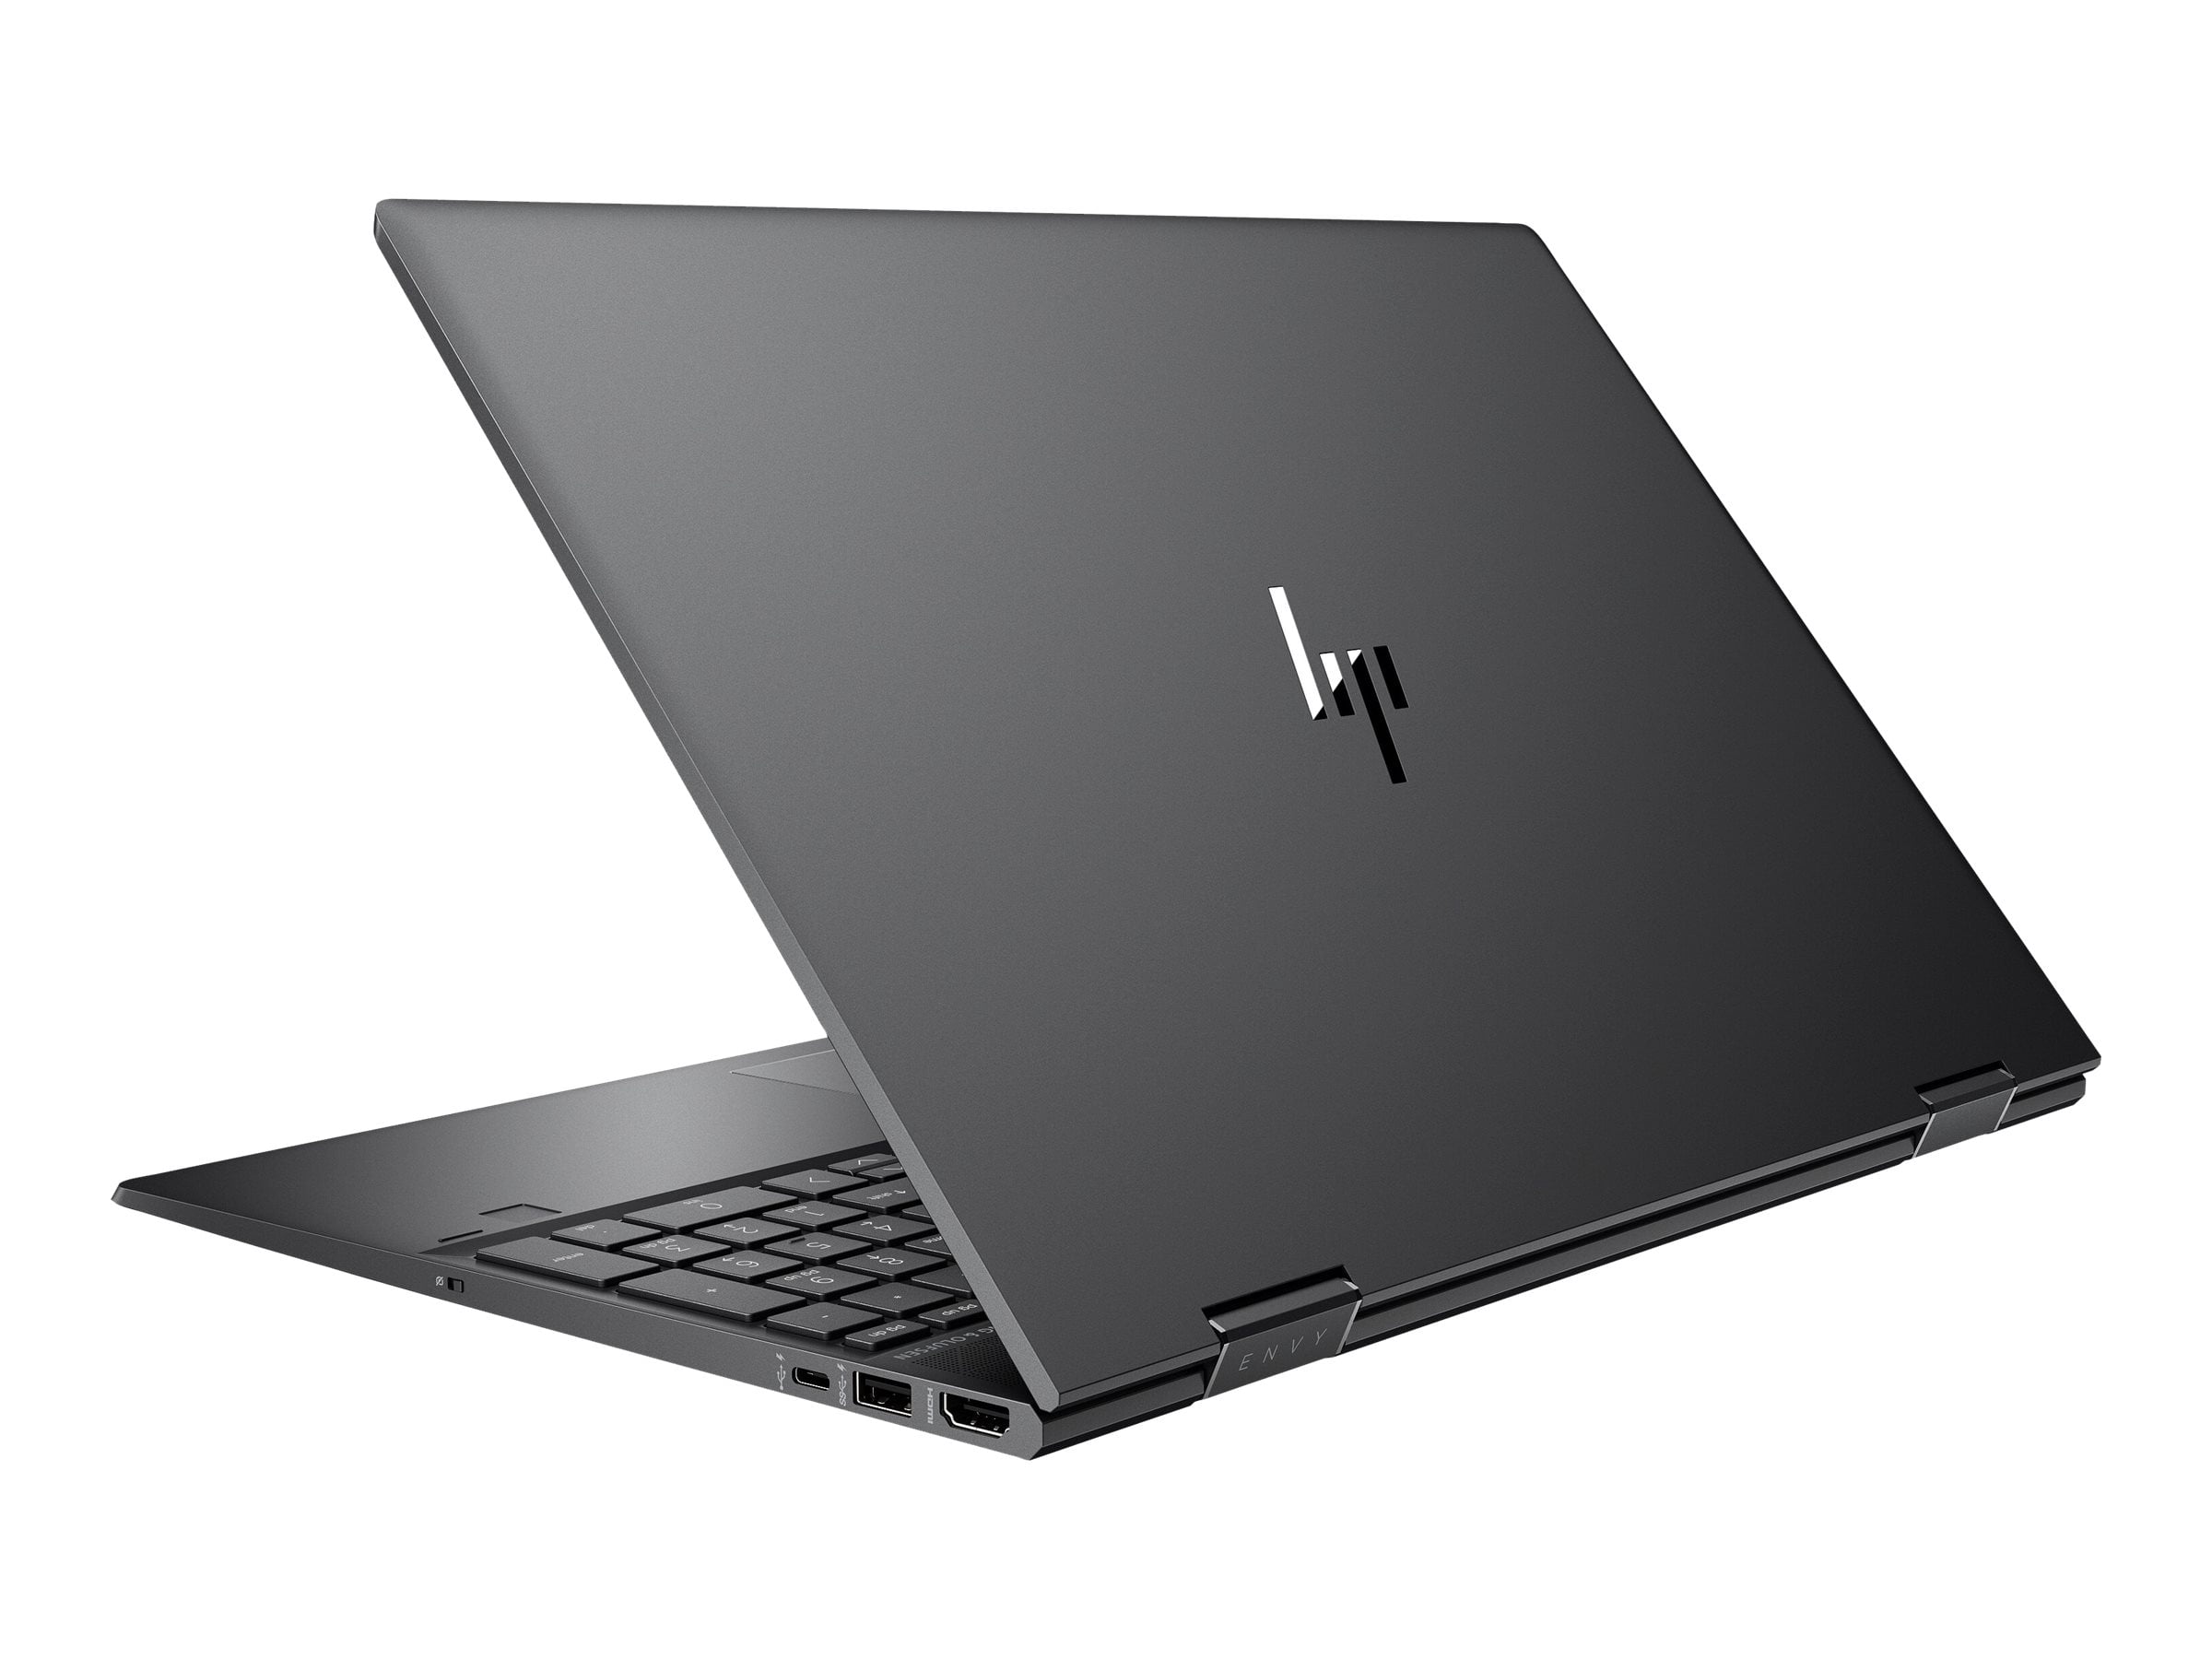 HP ENVY x360 Laptop 15-ds1063cl - Flip design - AMD Ryzen 5 4500U / 2.3 GHz  - Win 10 Home 64-bit - Radeon Graphics - 8 GB RAM - 512 GB SSD